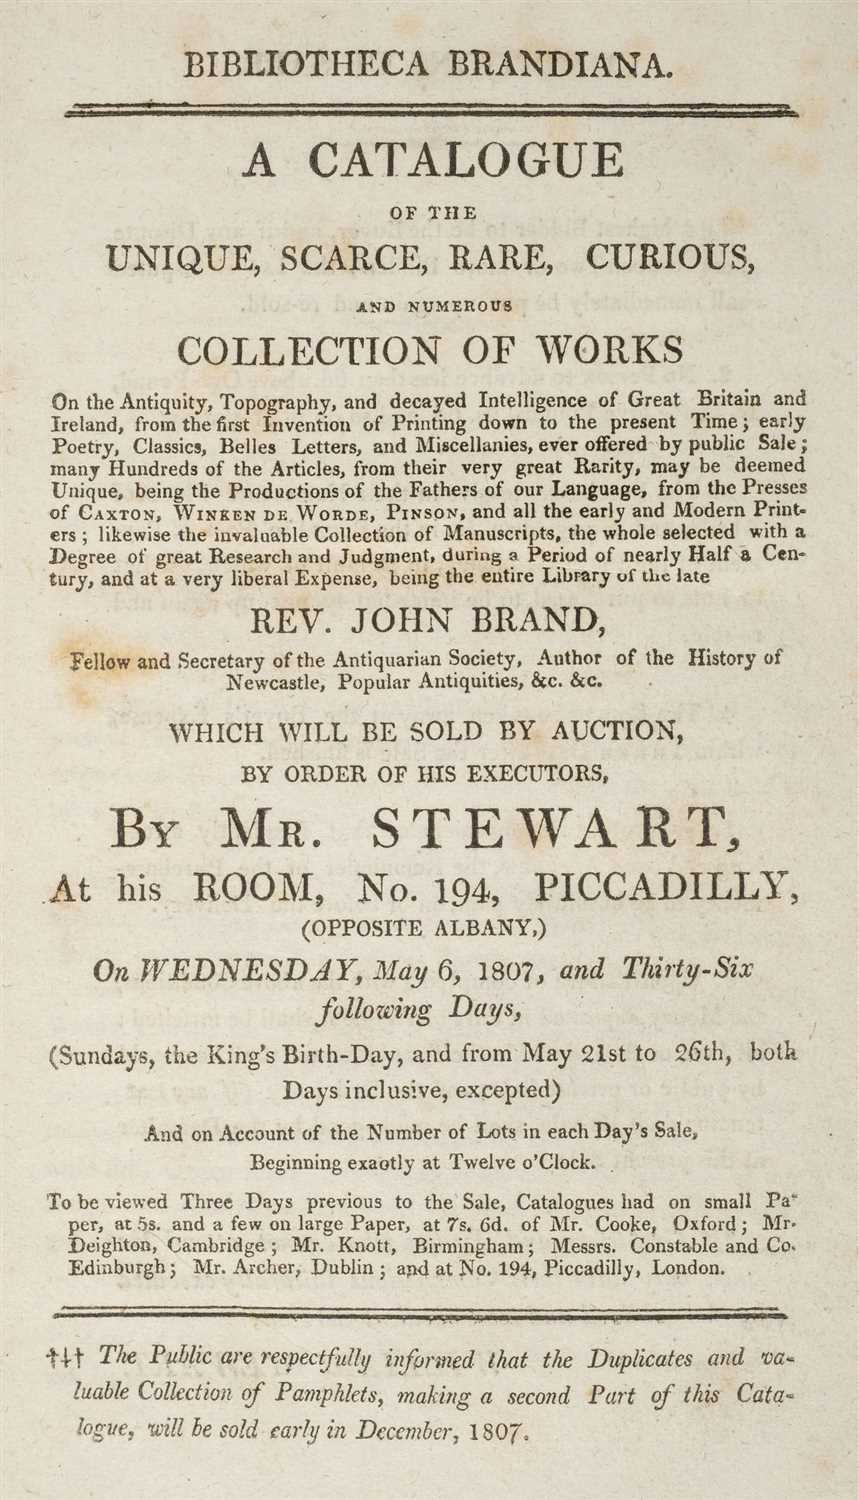 Lot 339 - Auction Catalogue. Bibliotheca Brandiana, 1807